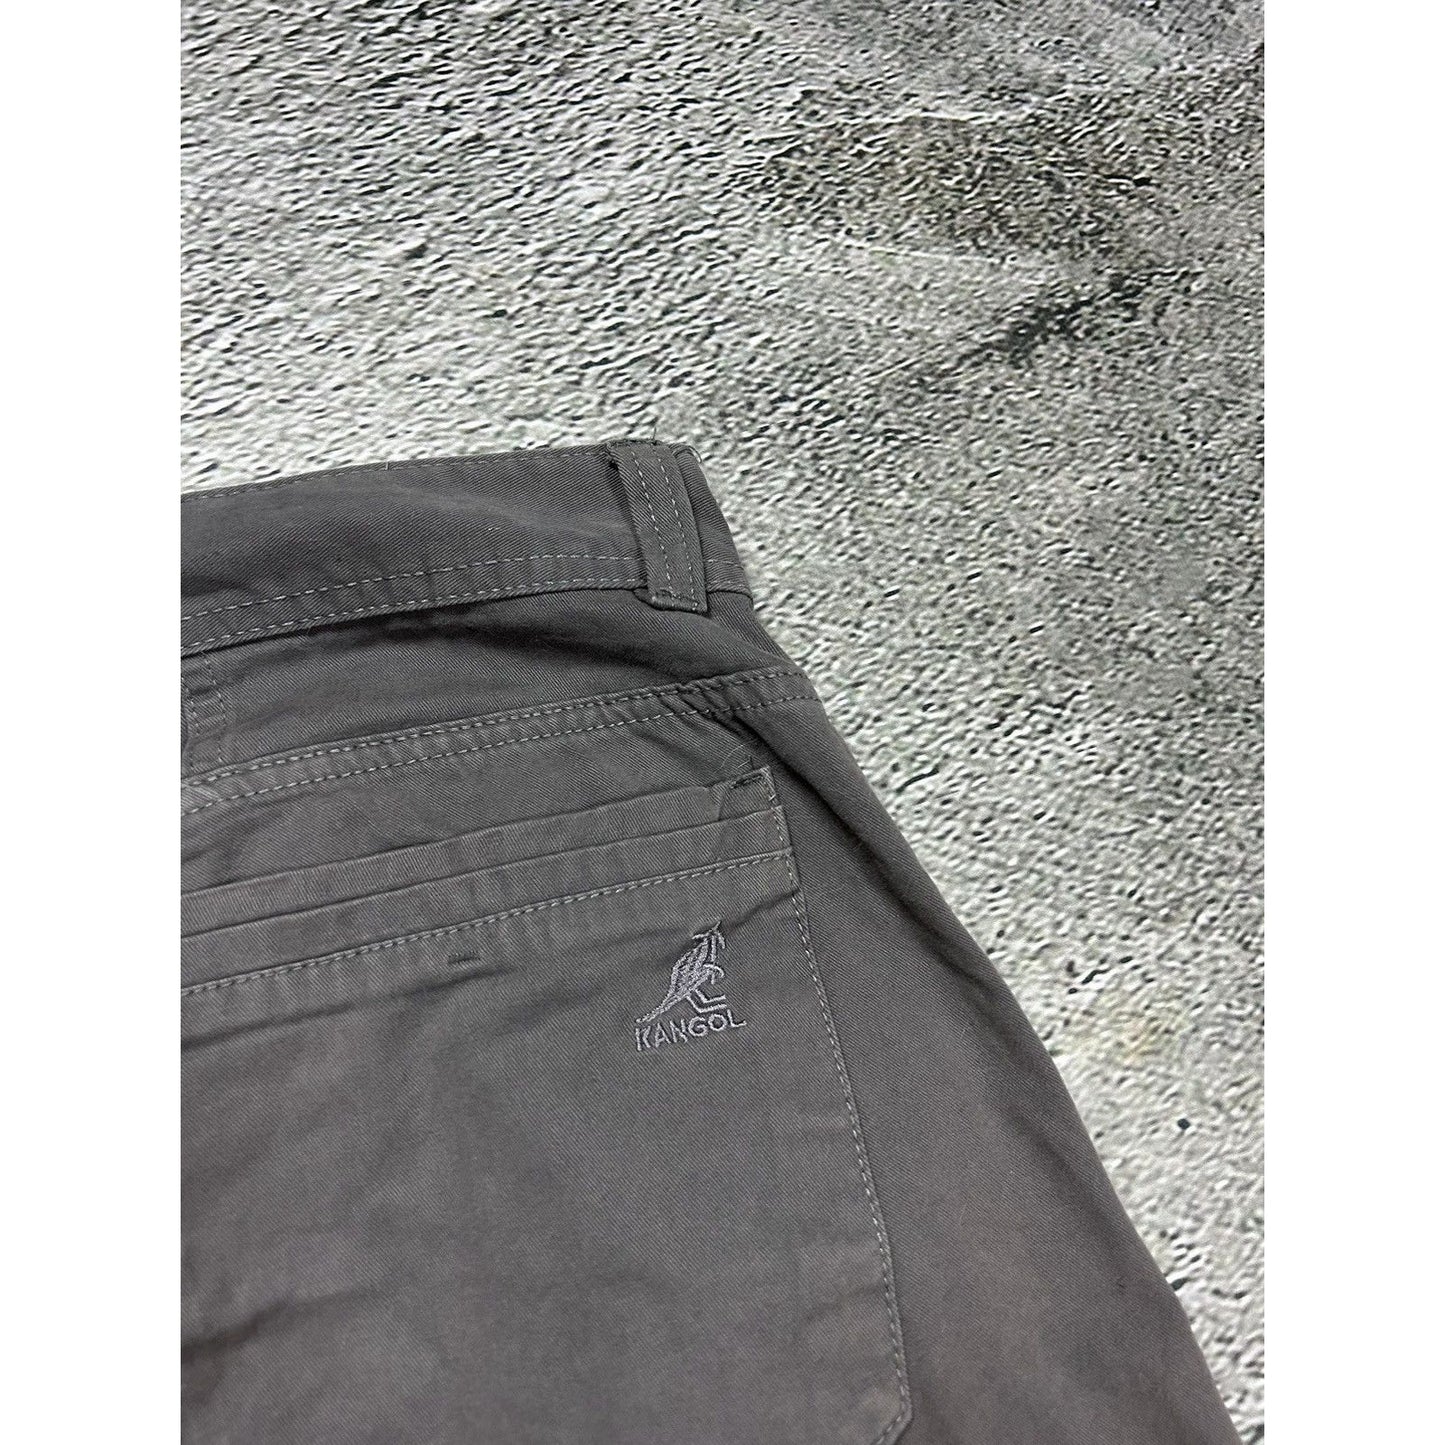 Kangol vintage grey shorts Y2K